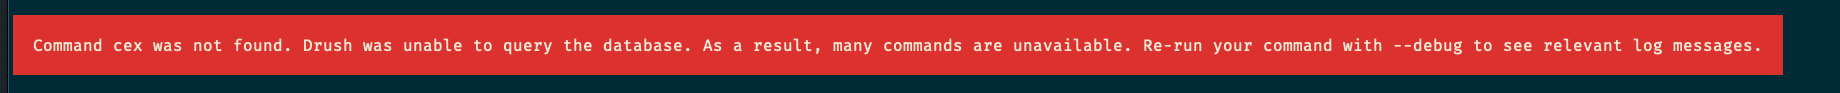 “Drush cex command not found” screenshot